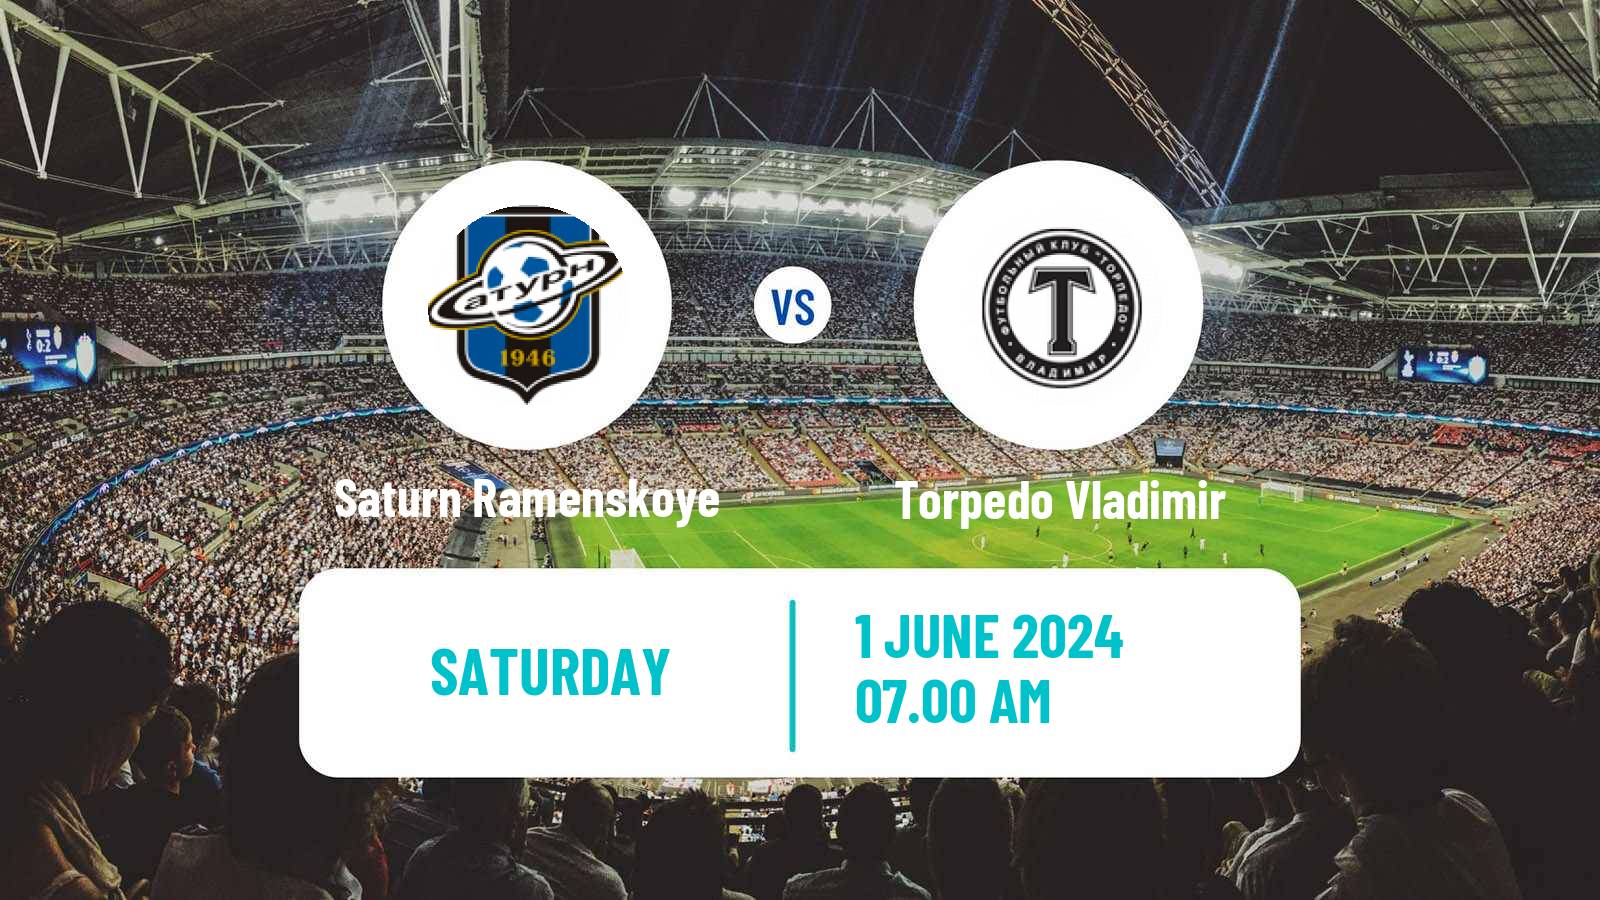 Soccer FNL 2 Division B Group 2 Saturn Ramenskoye - Torpedo Vladimir